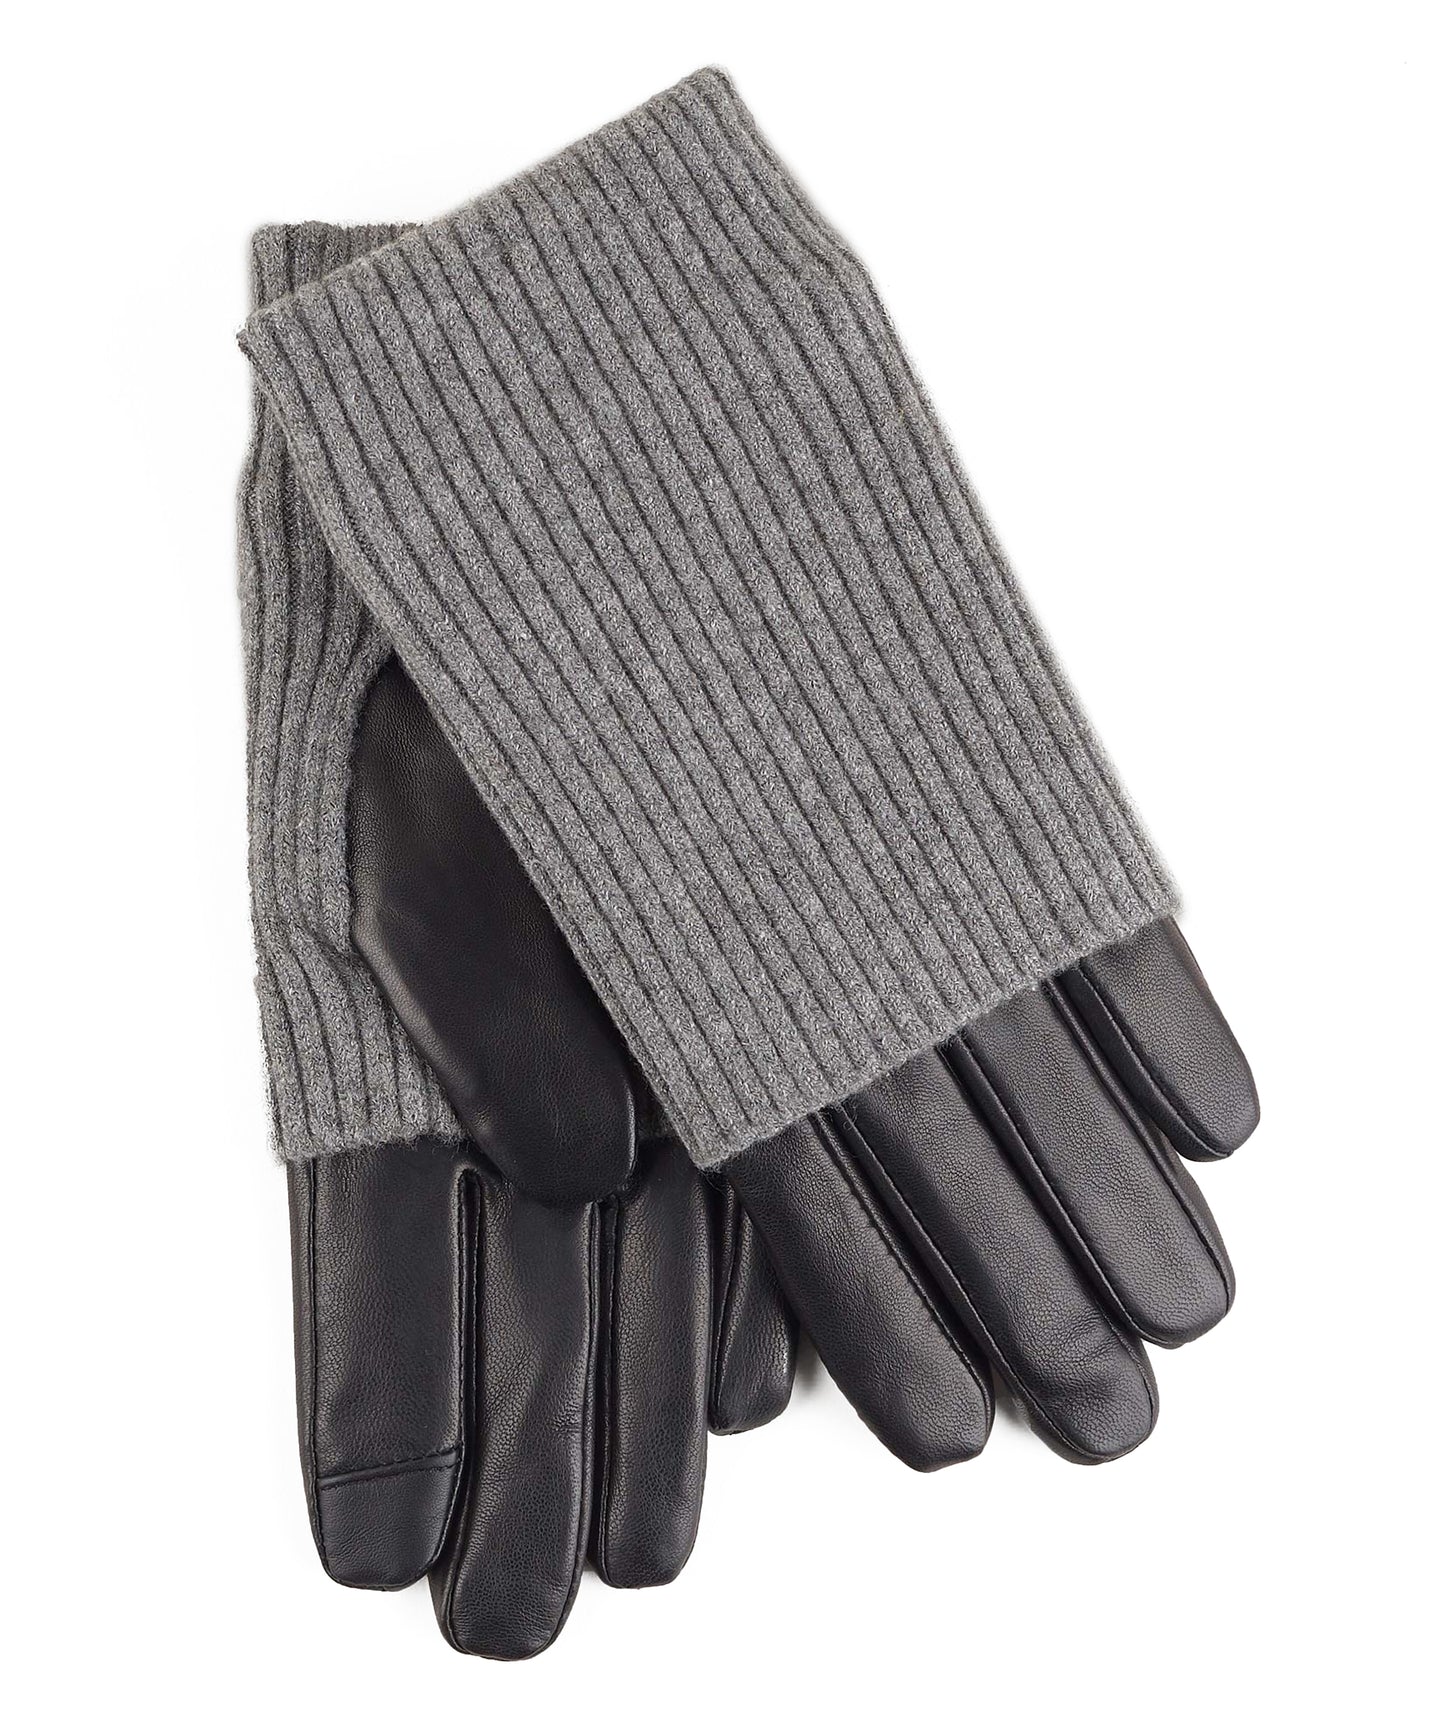 Fold Down Cuff Glove in color Black